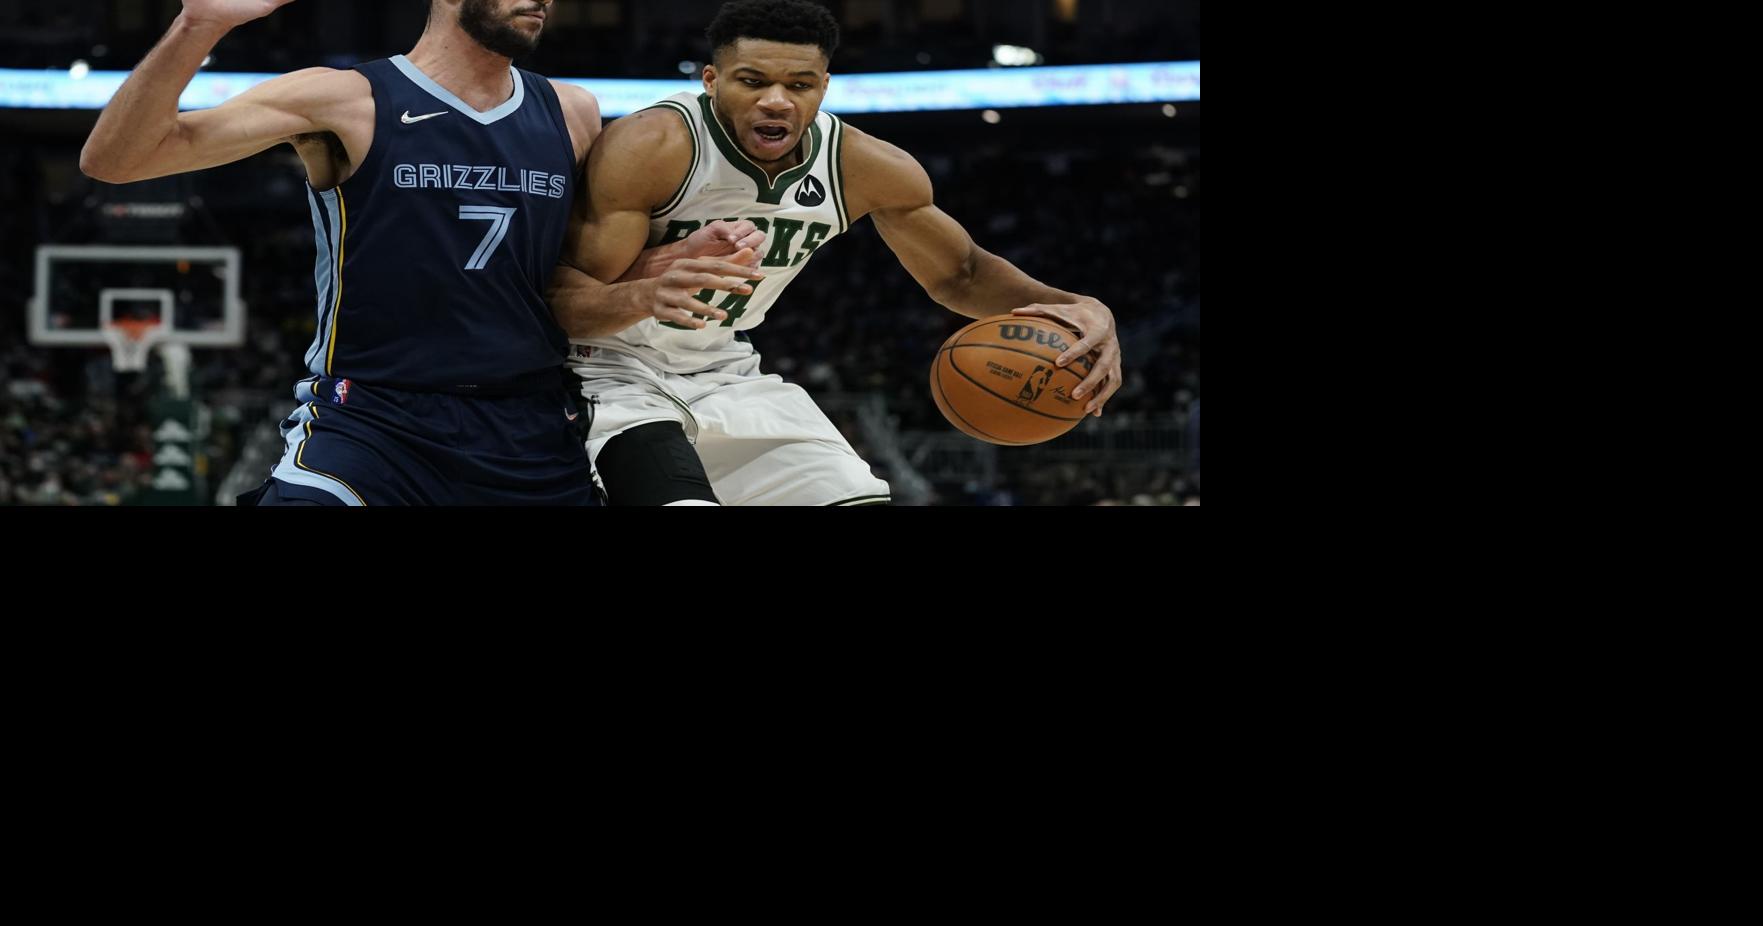 NBA Giannis Antetokounmpo Jersey Green - Burned Sports